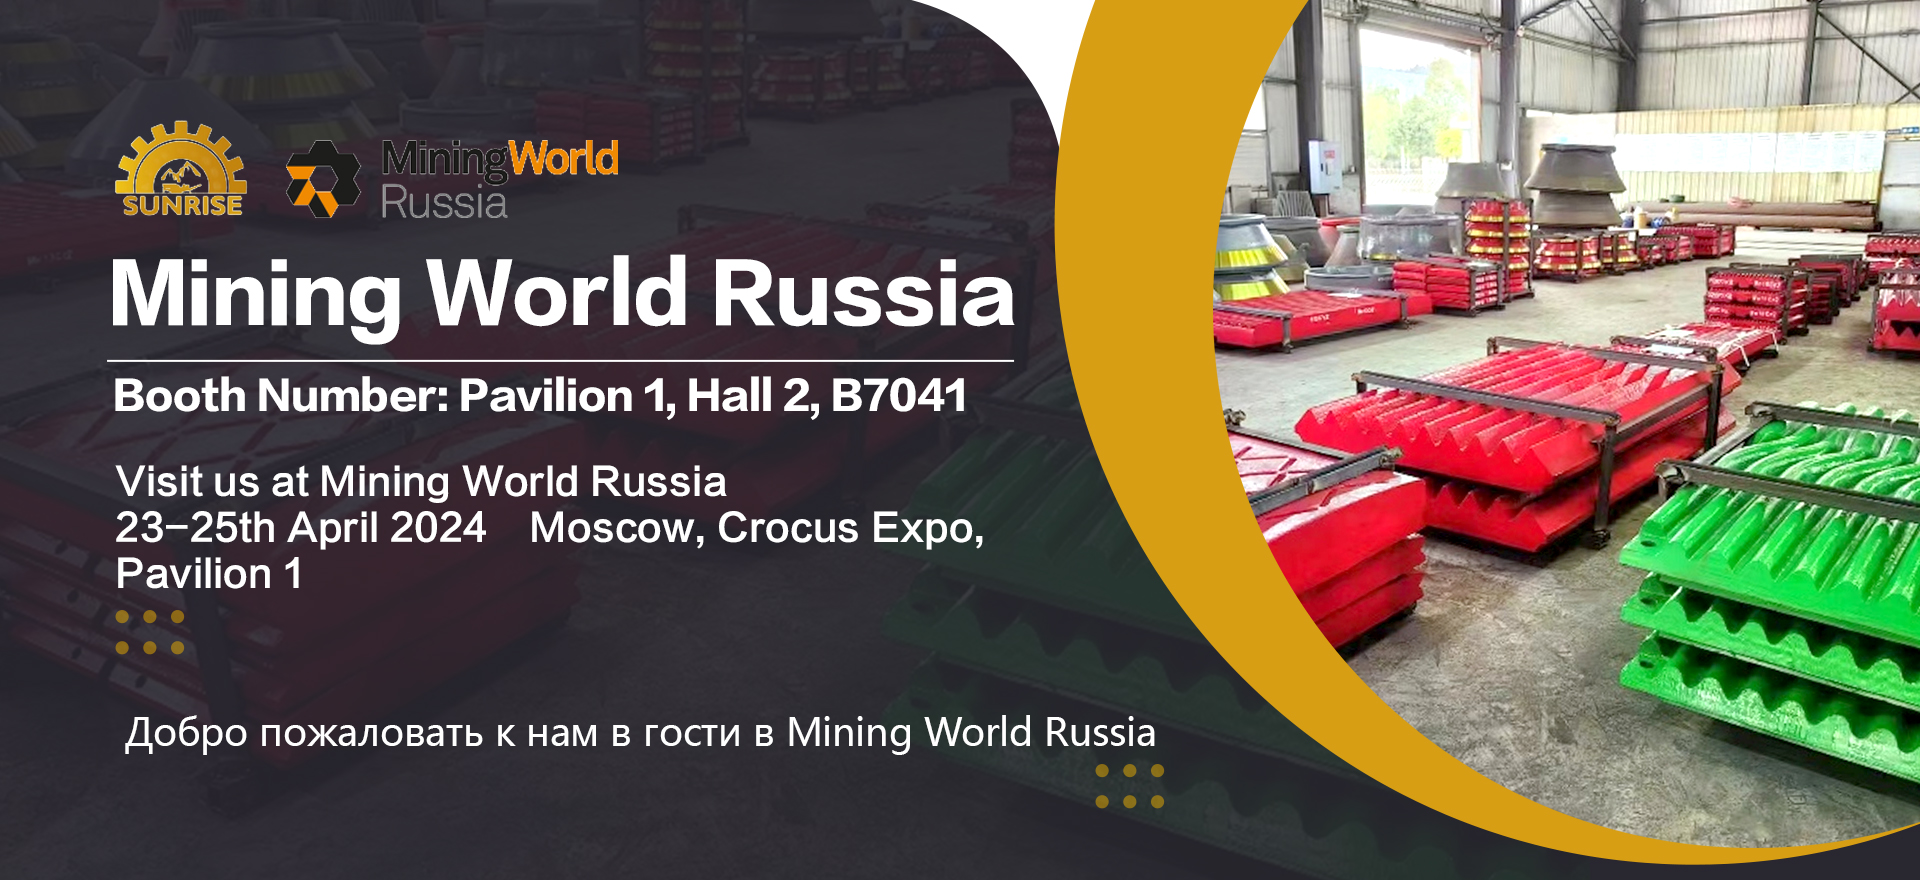 Sunrise Mining World Russia